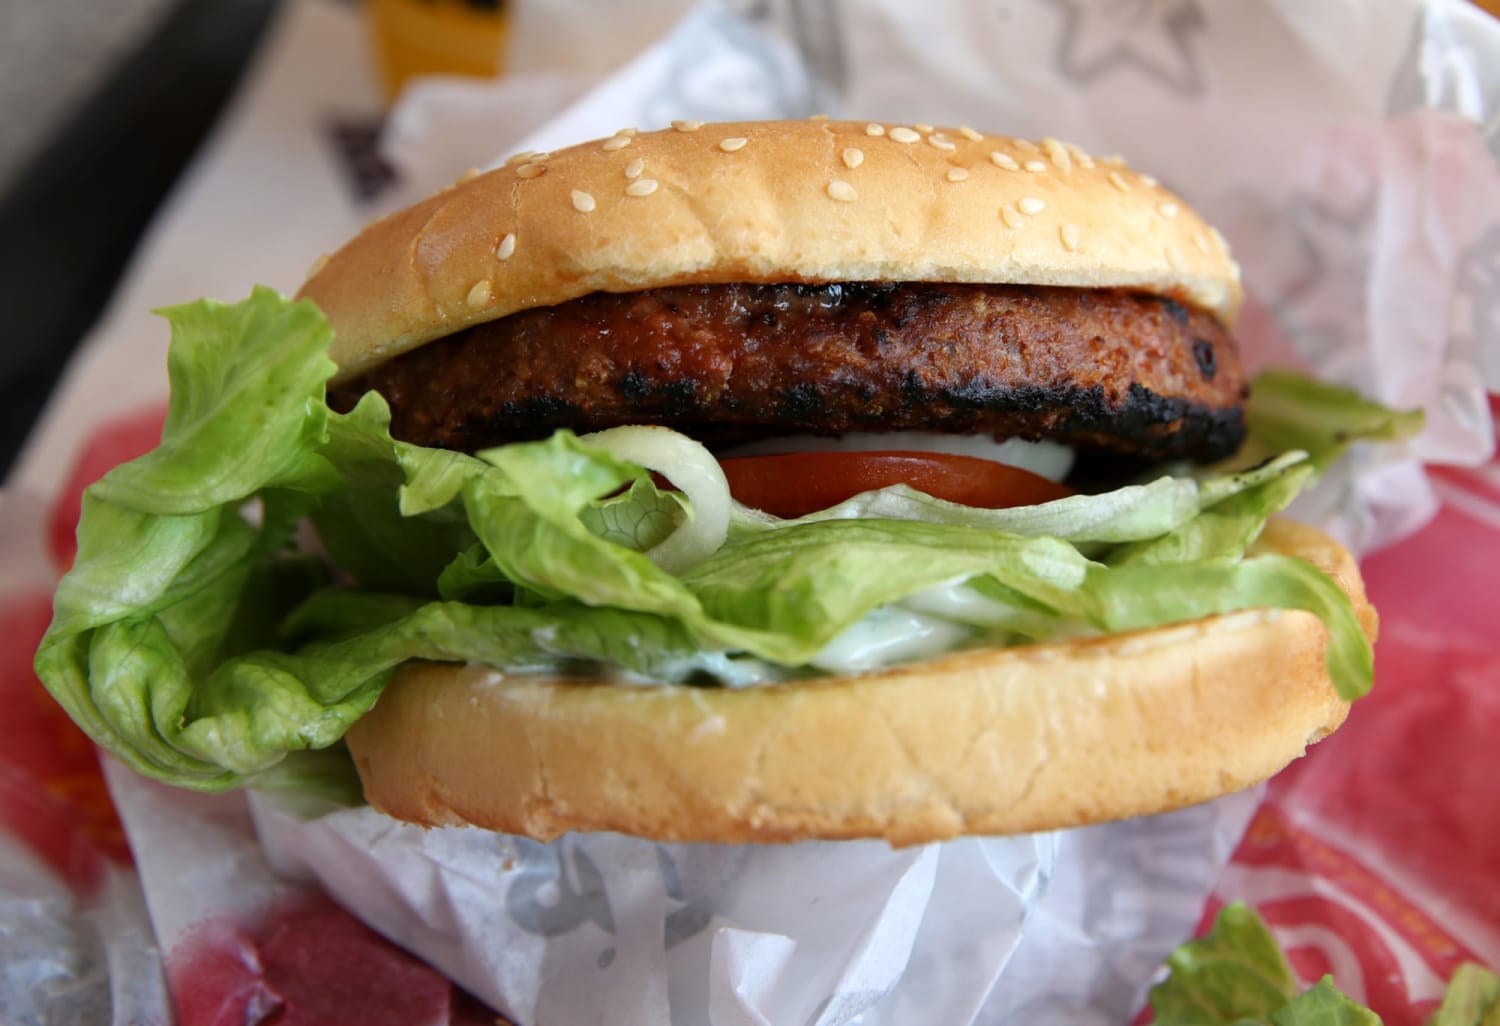 No beef, no problem: Most popular plant based burgers